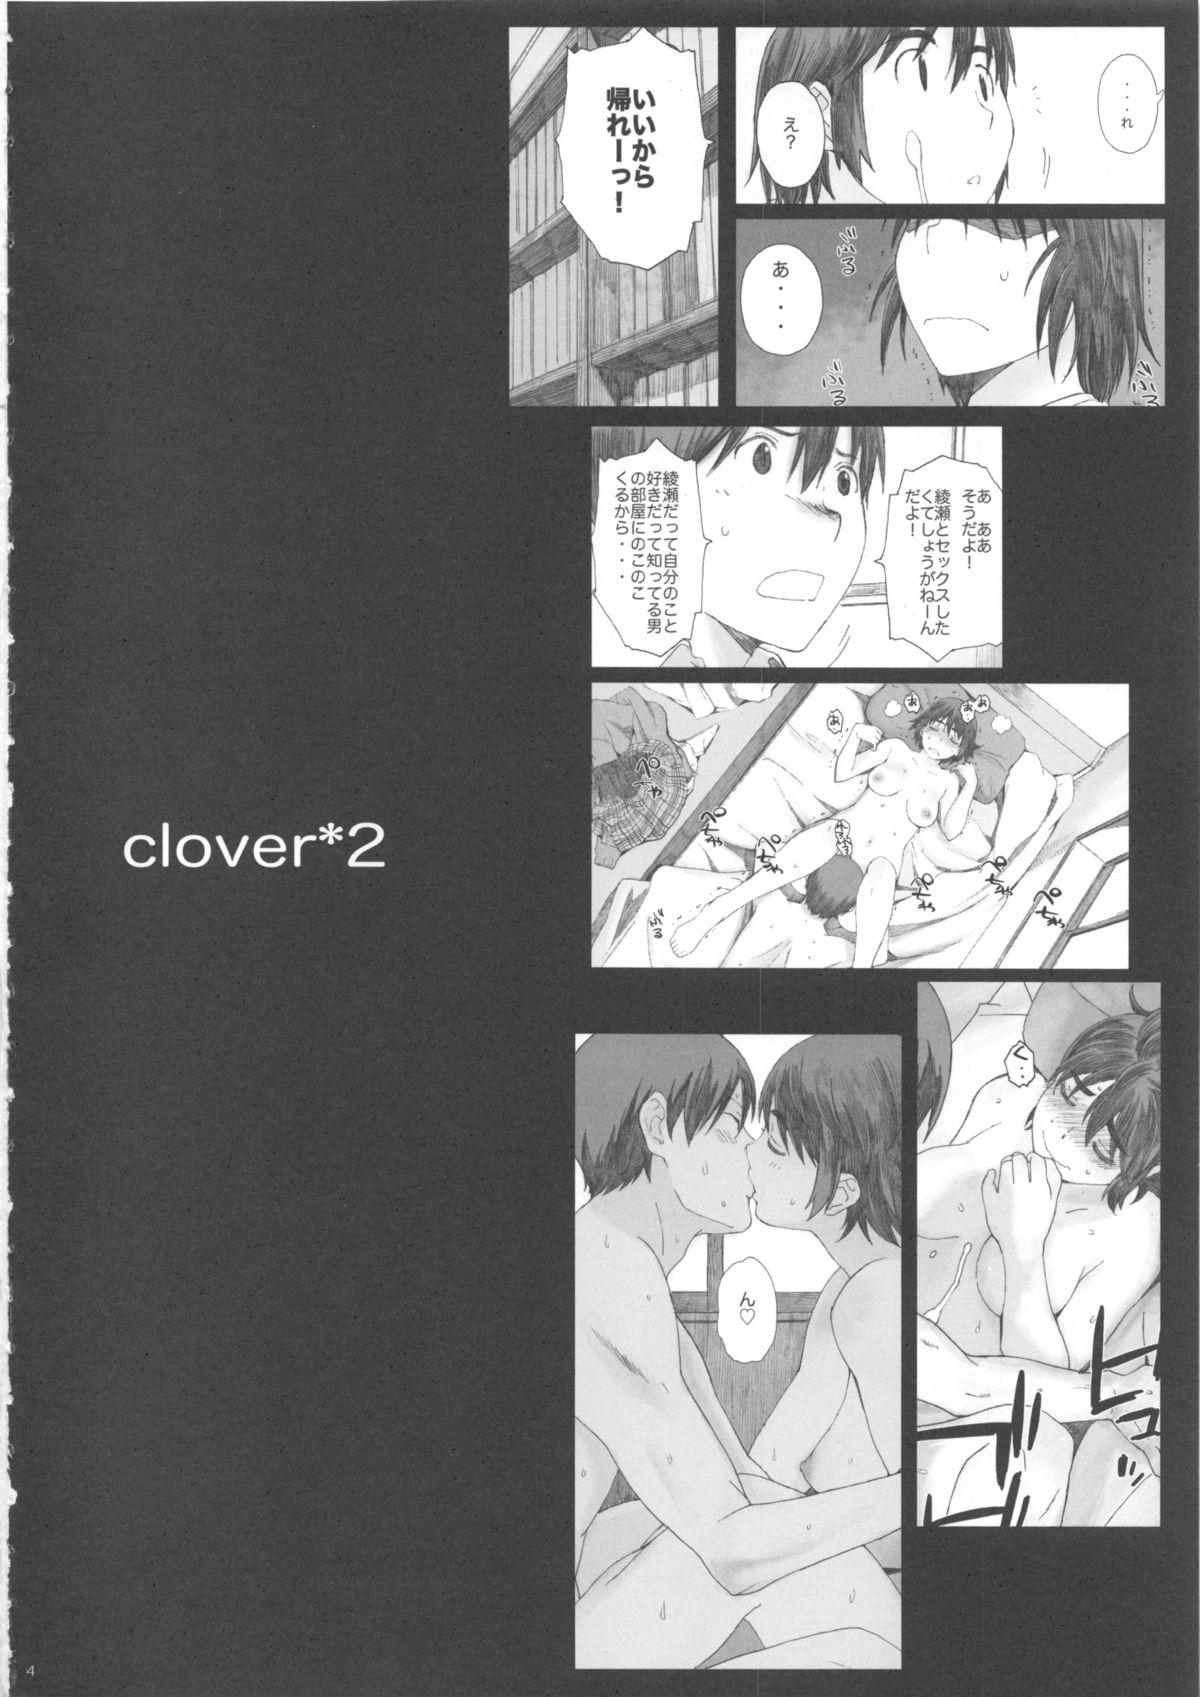 Jerk Off clover＊2 - Yotsubato Gozo - Page 4